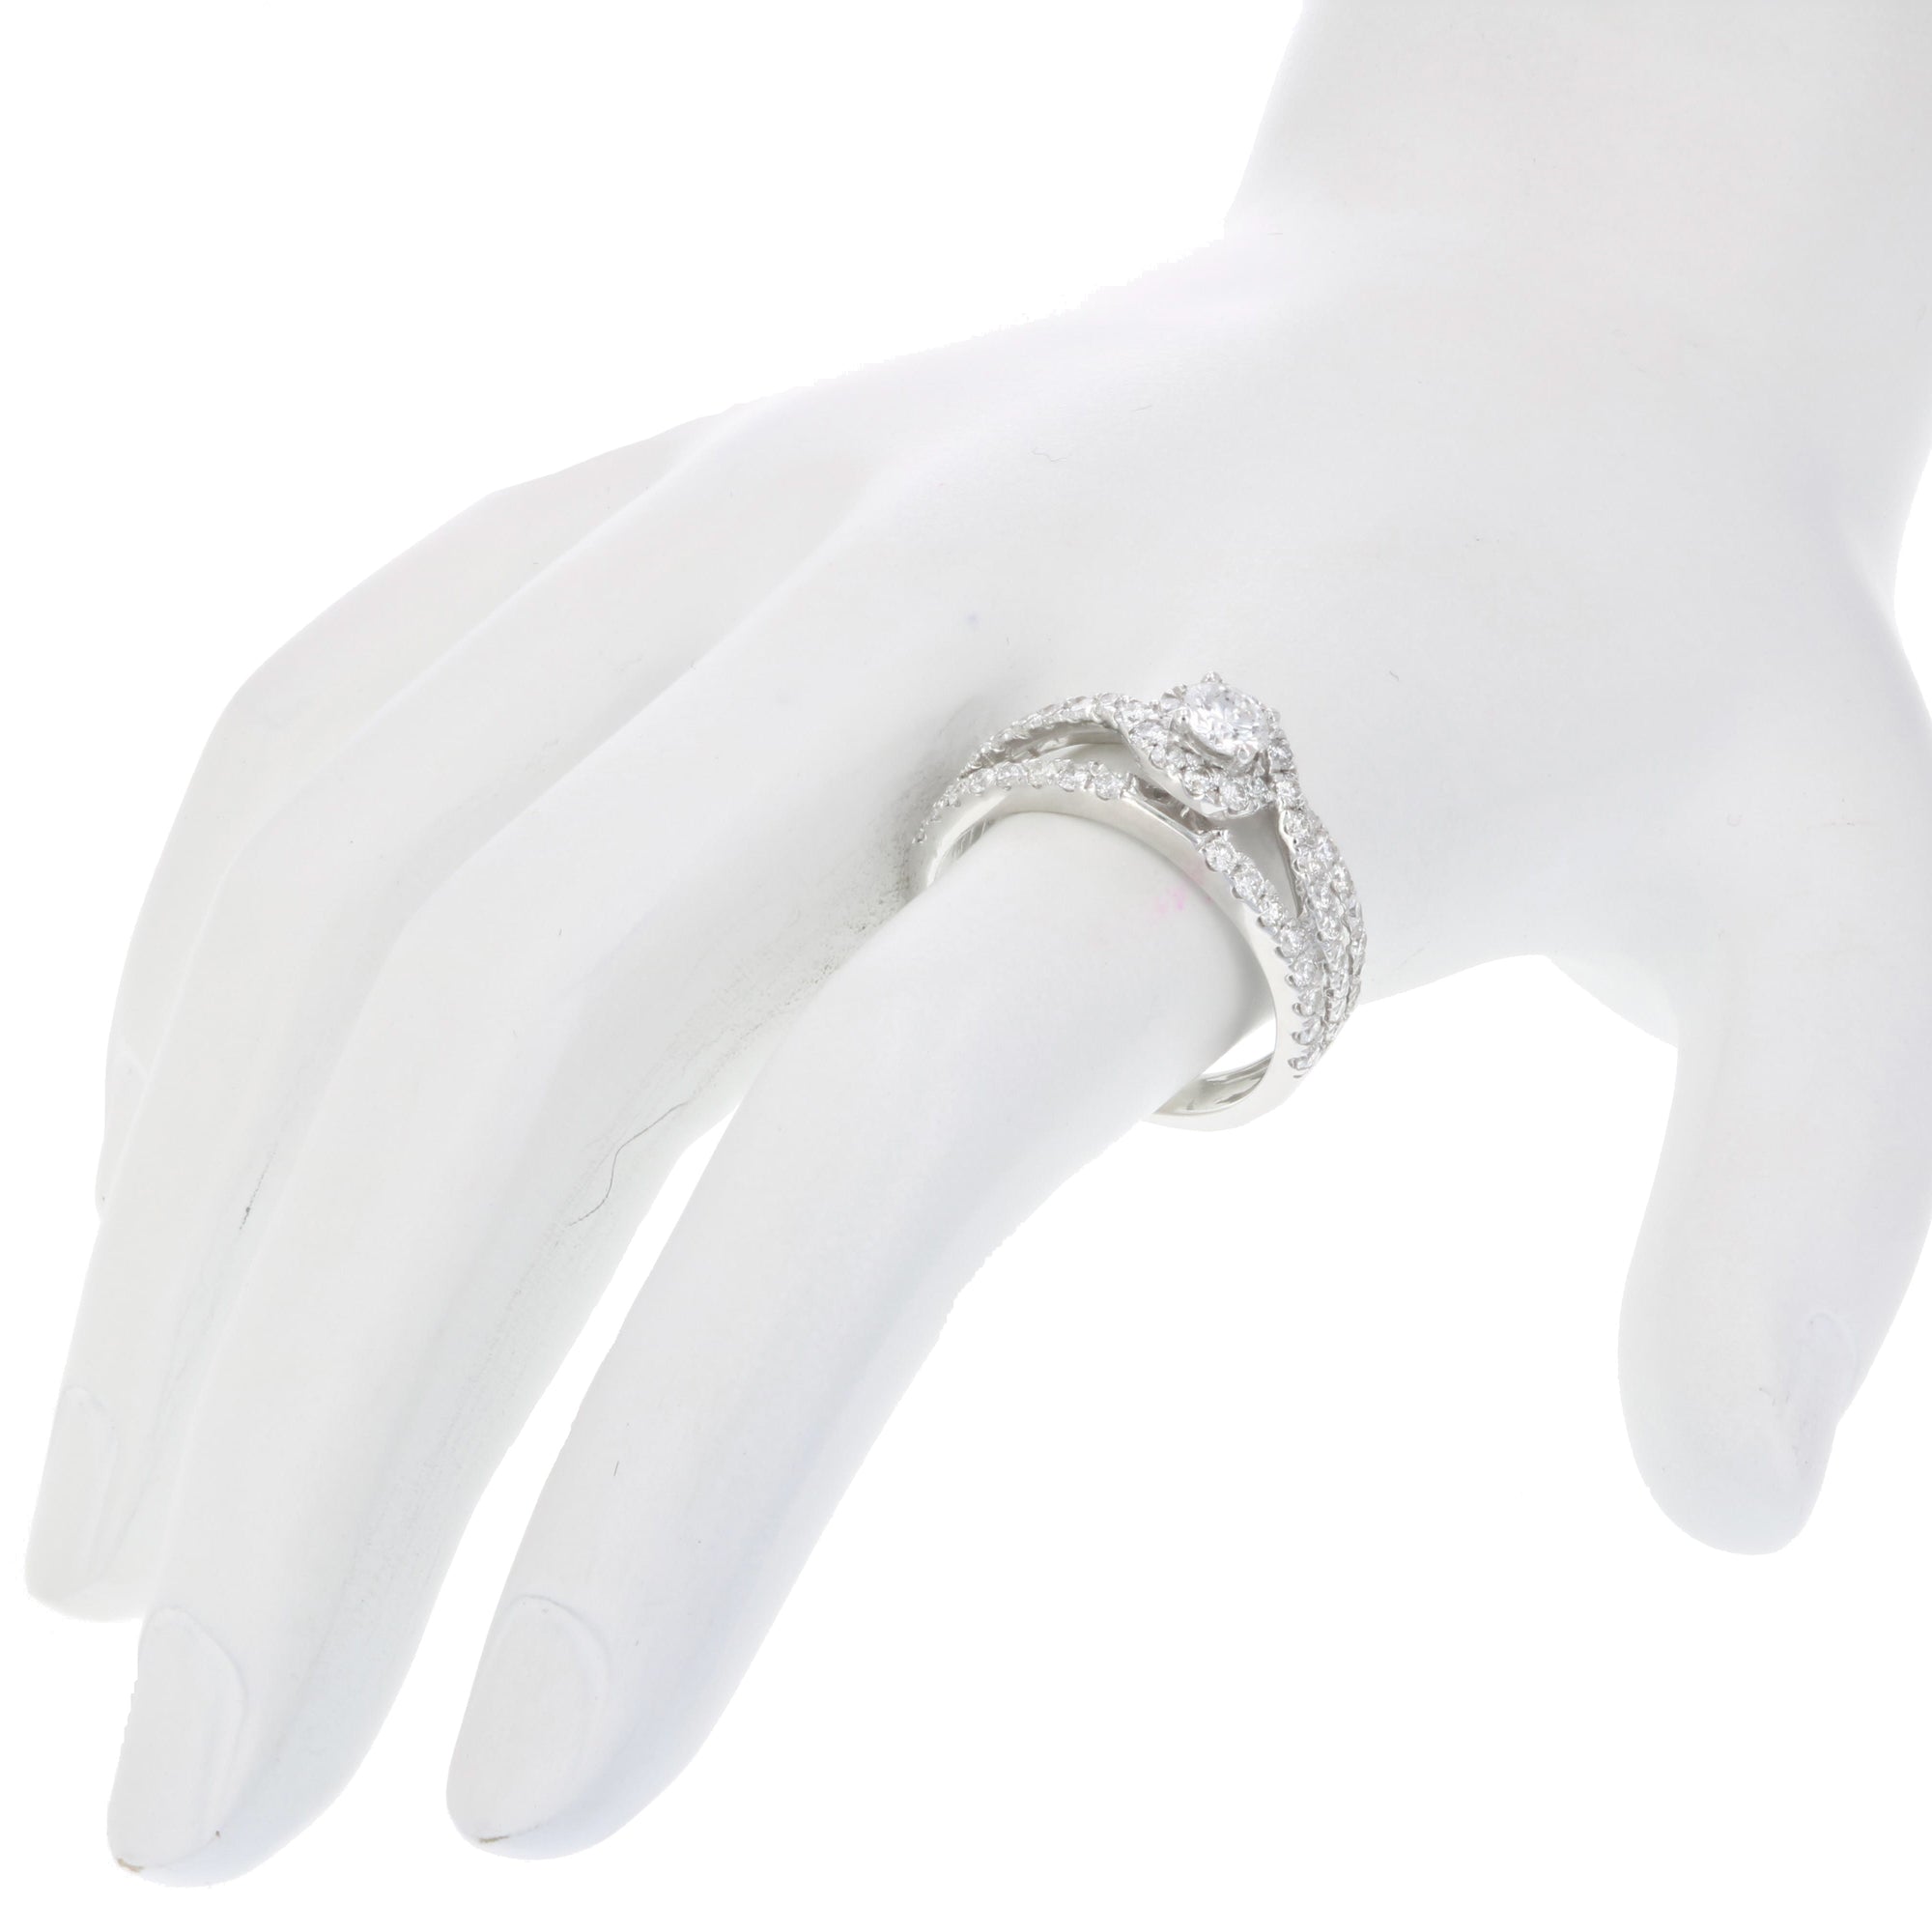 1 cttw Diamond Halo Round Wedding Engagement Ring 14K White Gold Bridal Design